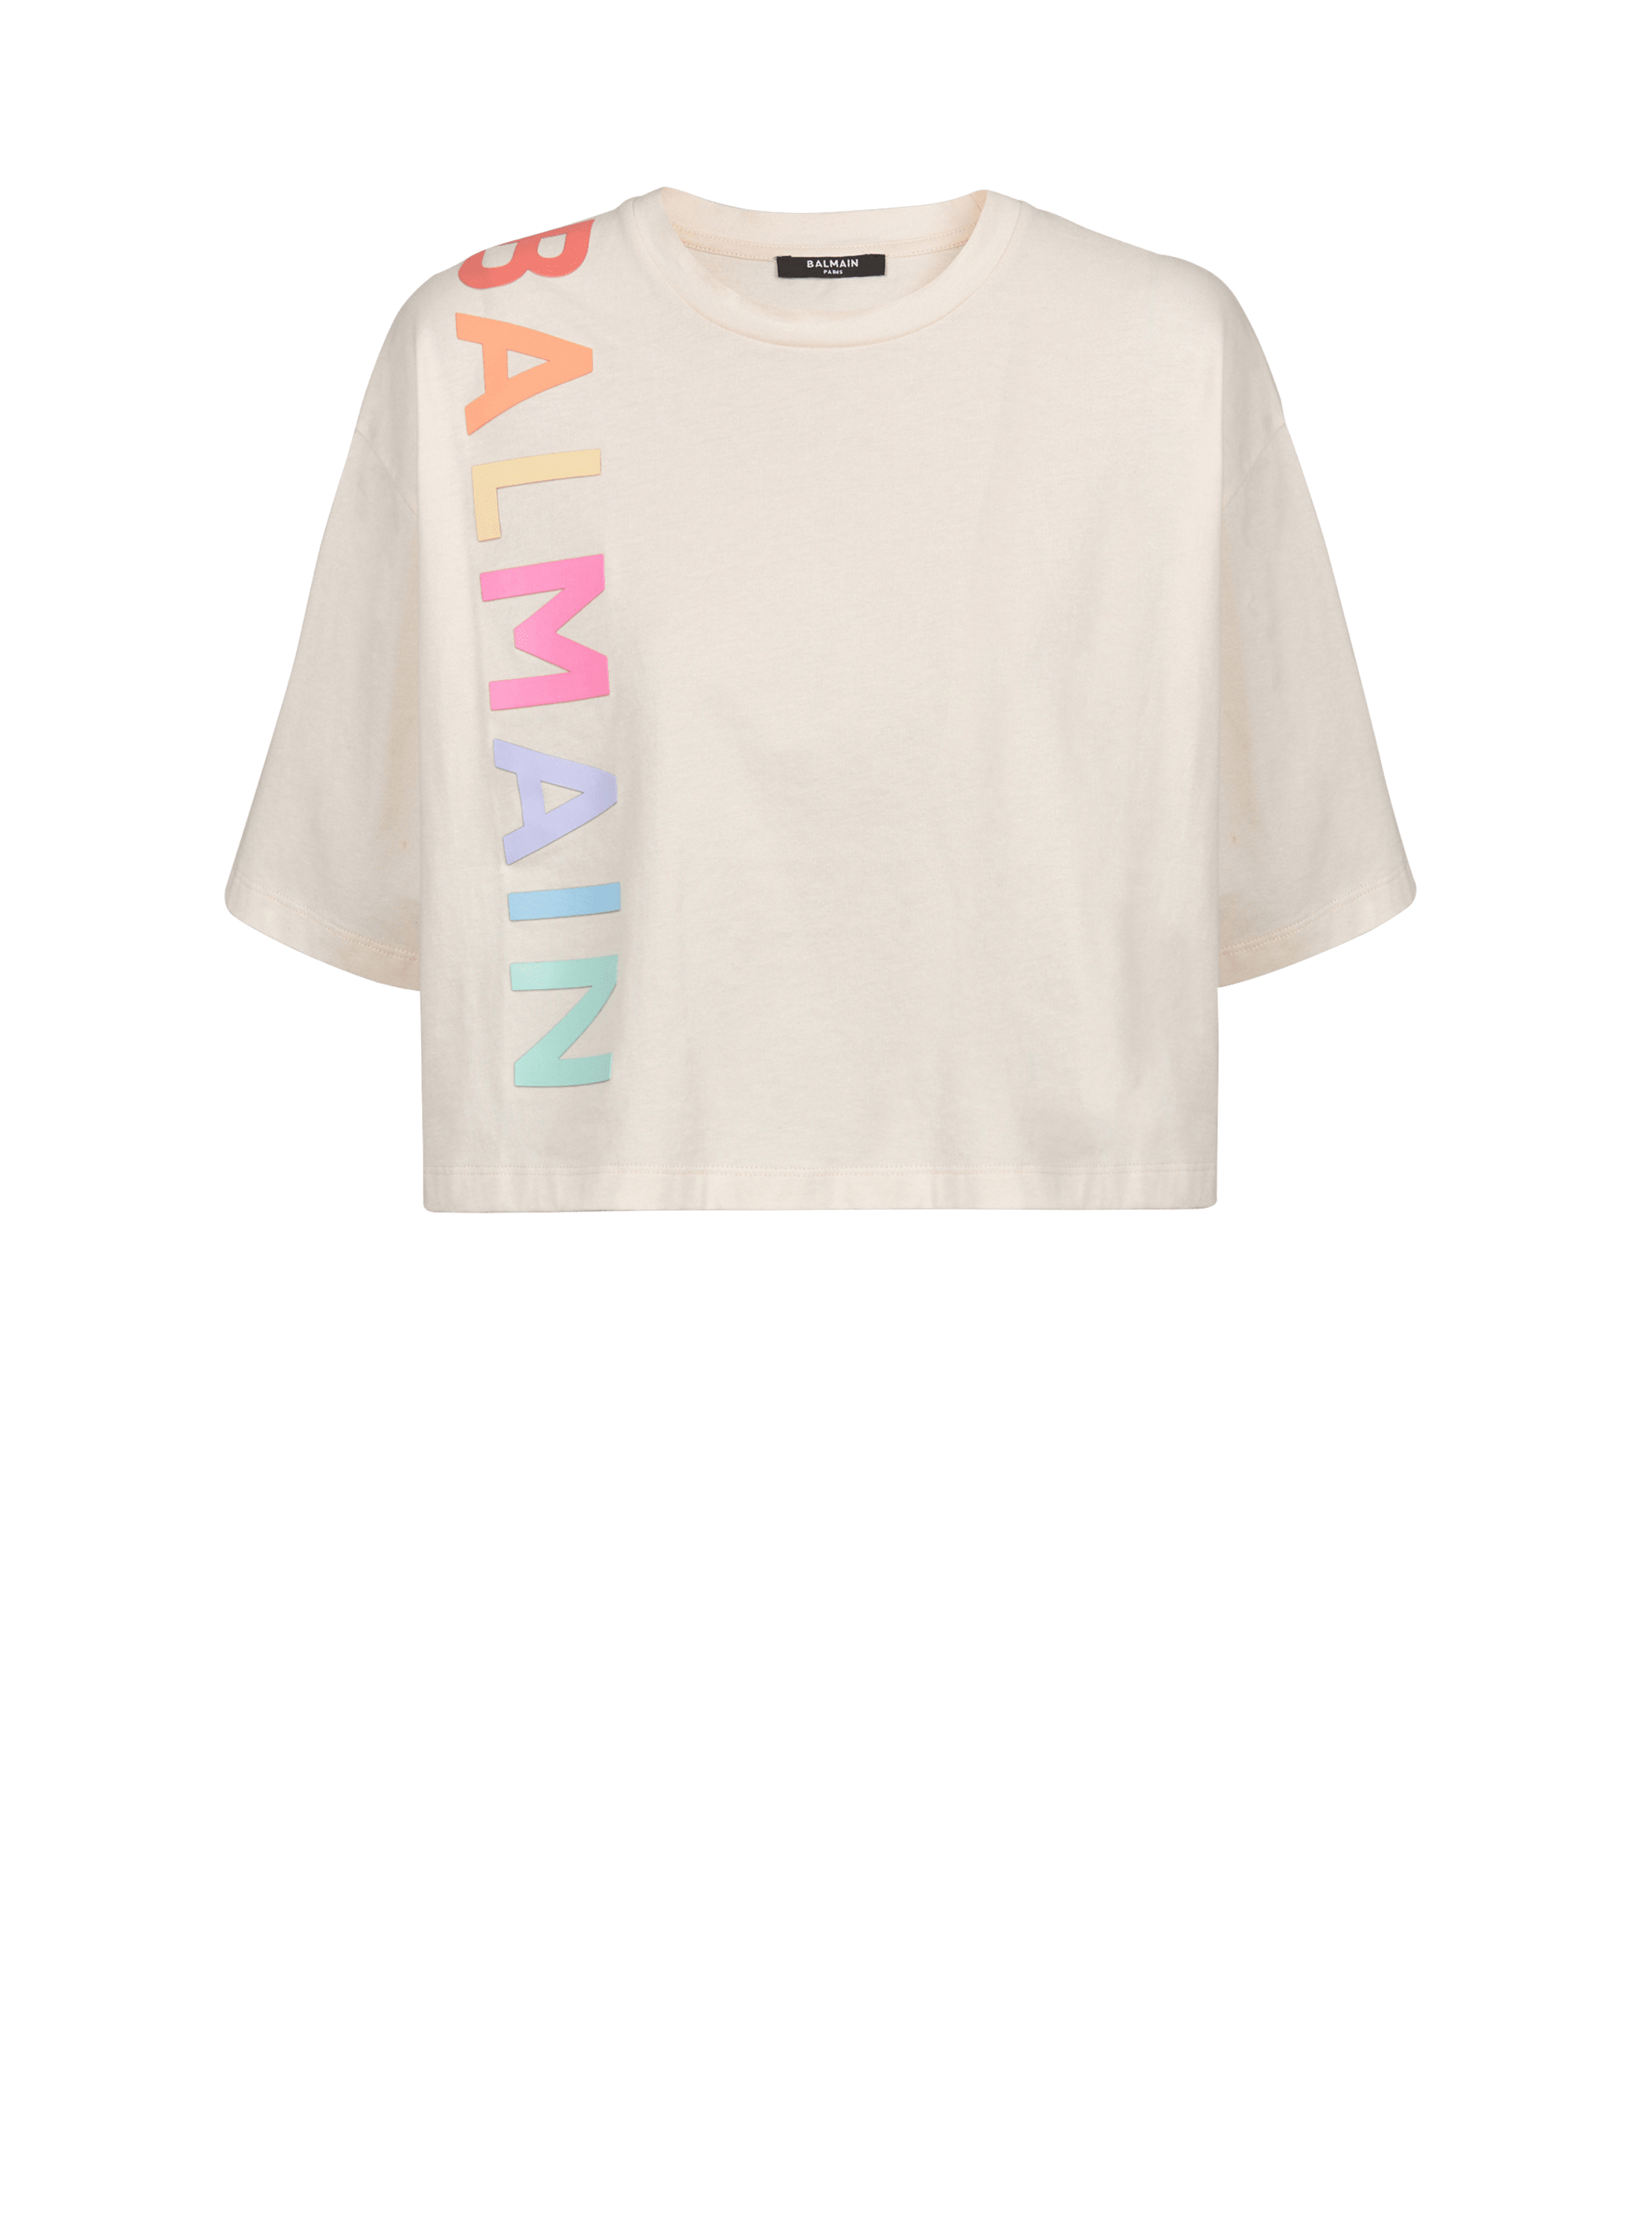 Cropped cotton Balmain logo T-shirt